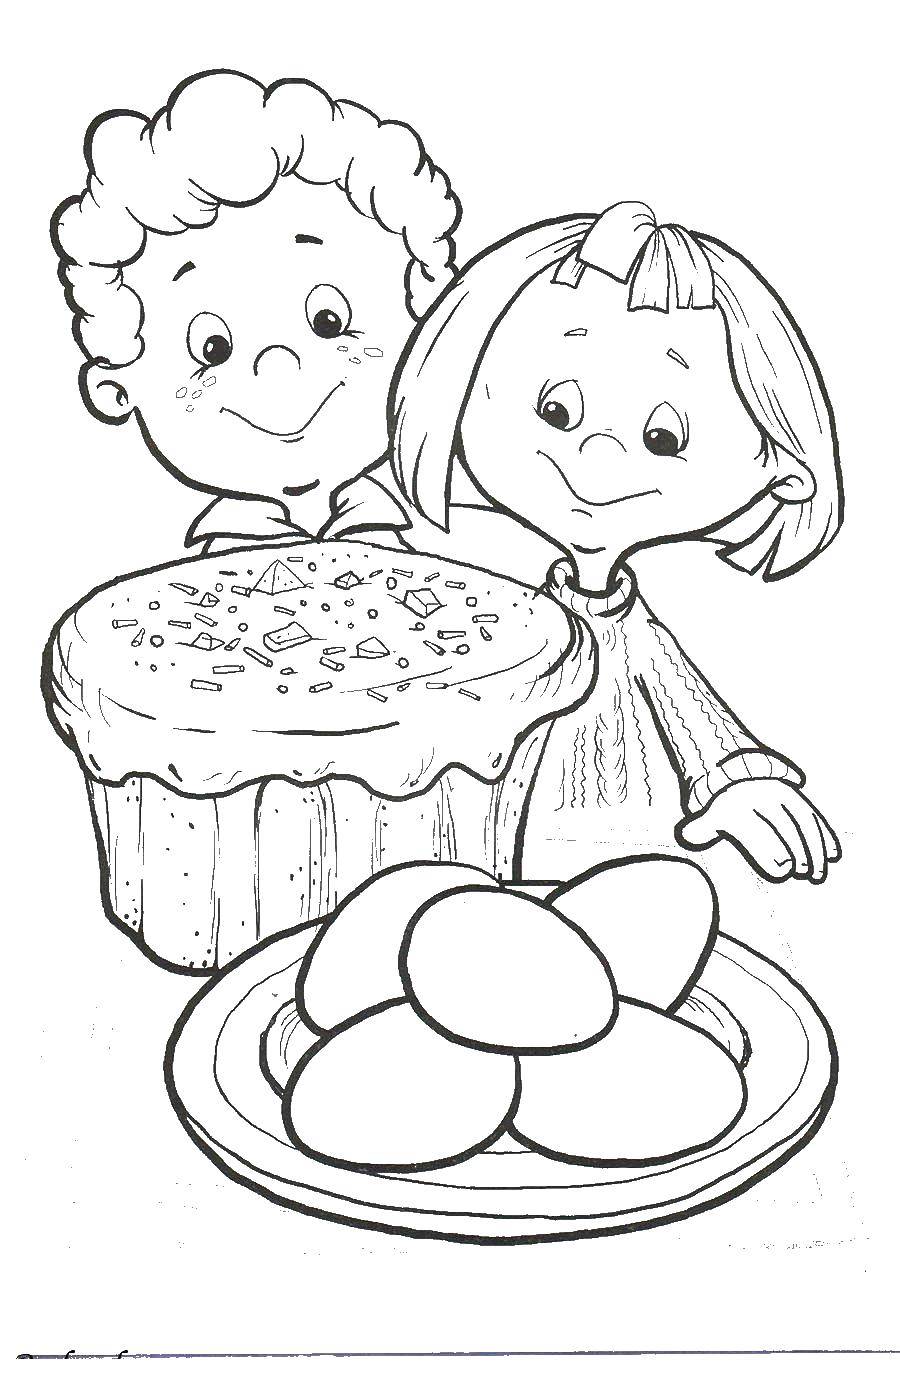 Название: Раскраска Дети и пироги. Категория: дети. Теги: дети, пироги, еда.